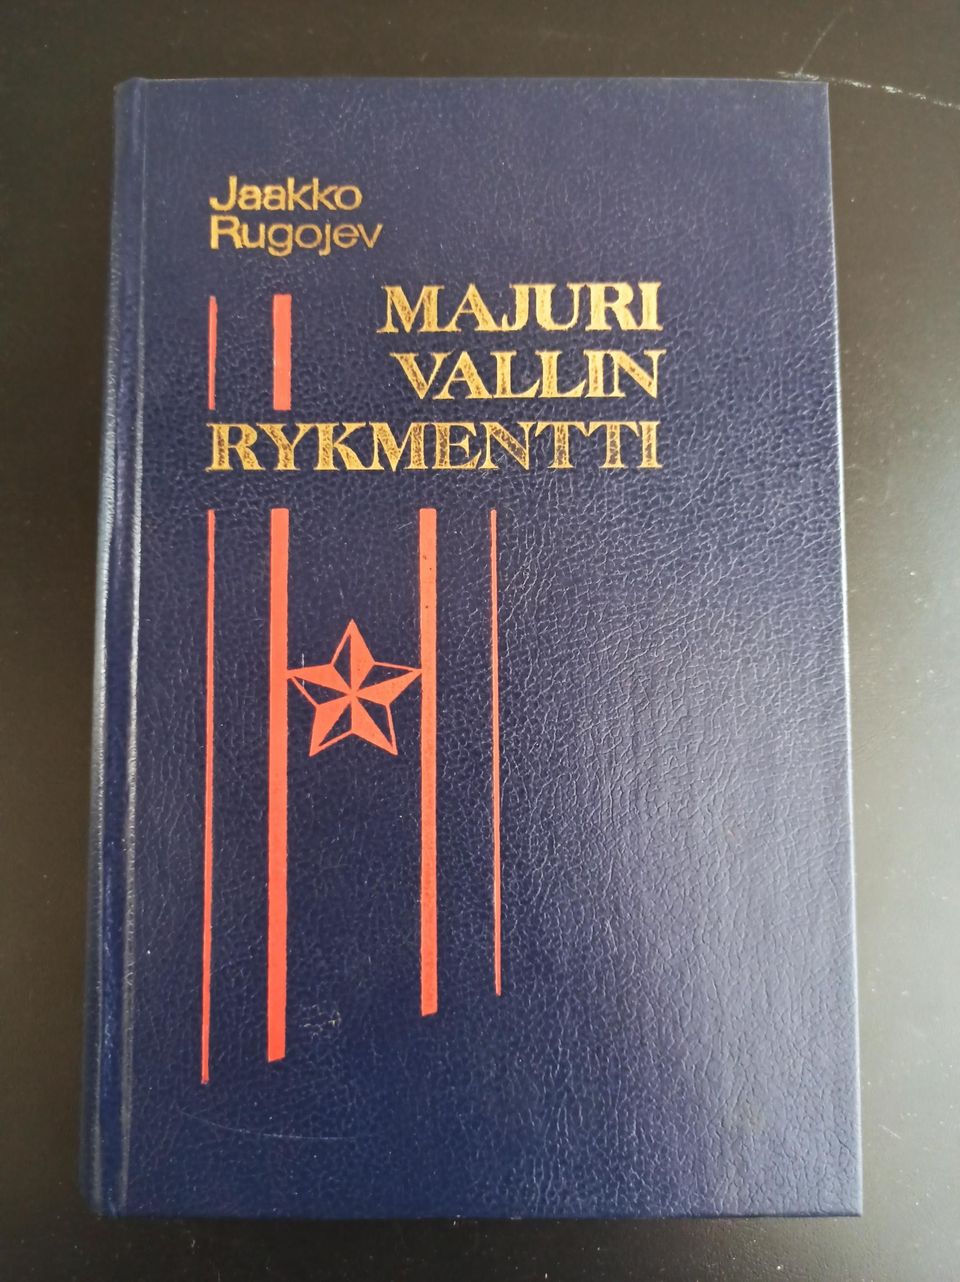 Majuri Vallin rykmentti, Jaakko Rugojev, v. 1990